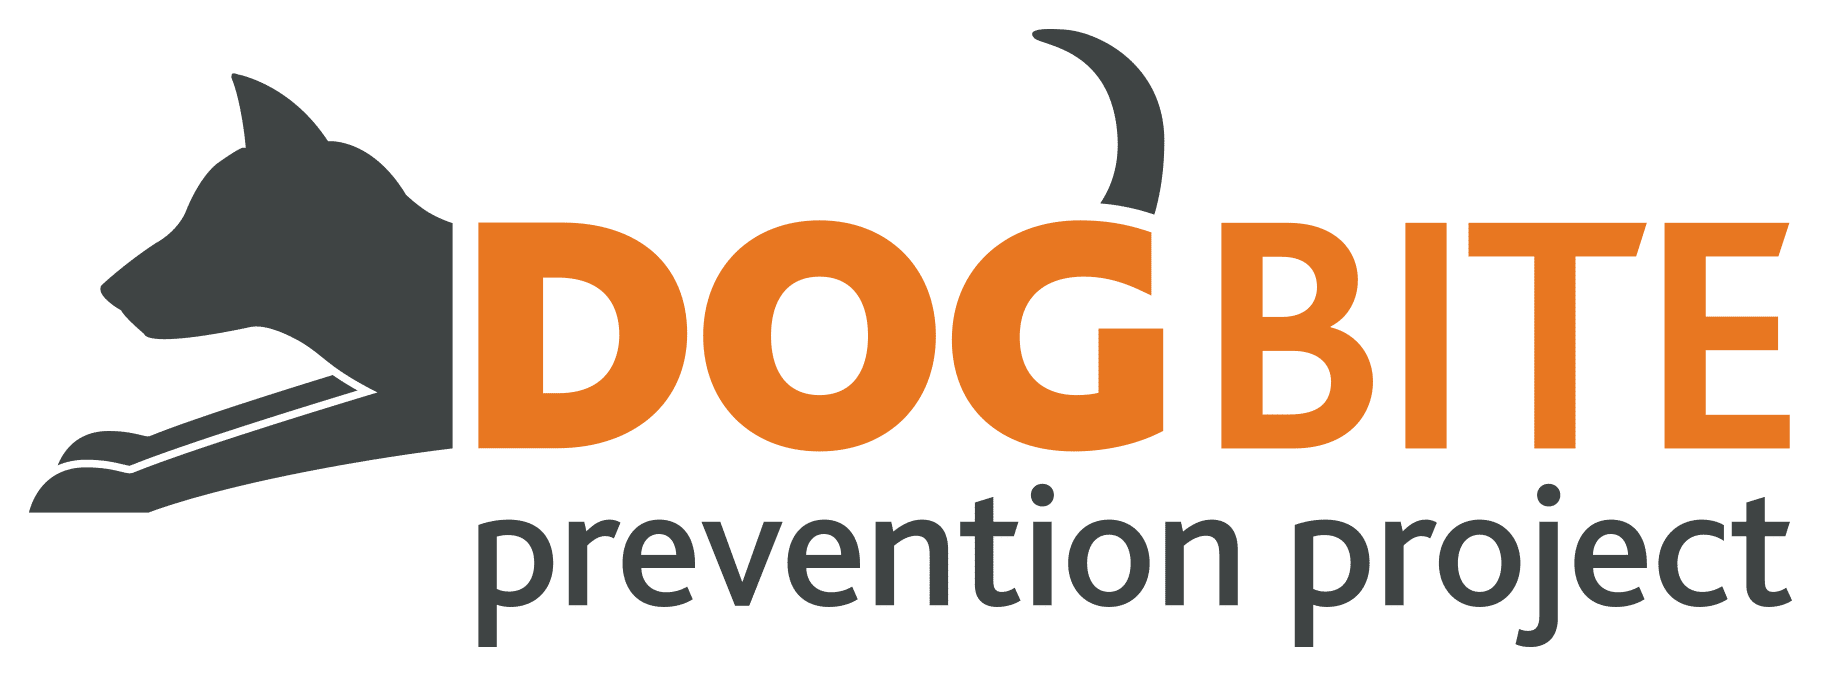 Dog Bite Prevention Project